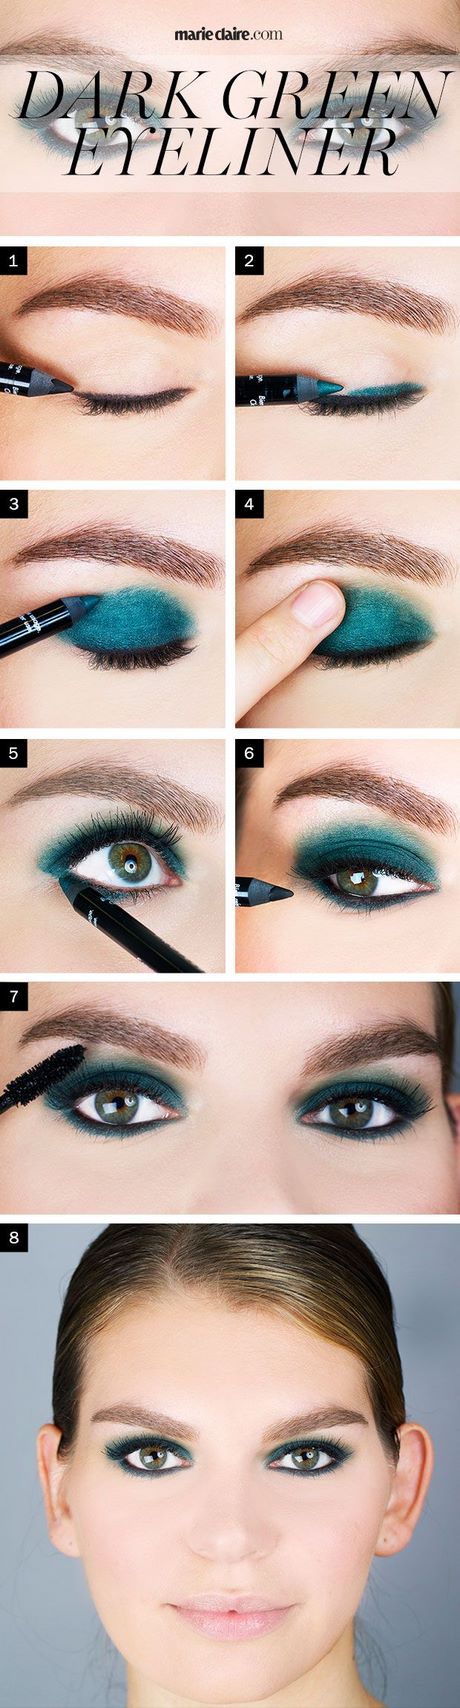 green-eye-makeup-tutorial-pinterest-11 Groene ogen make-up tutorial pinterest